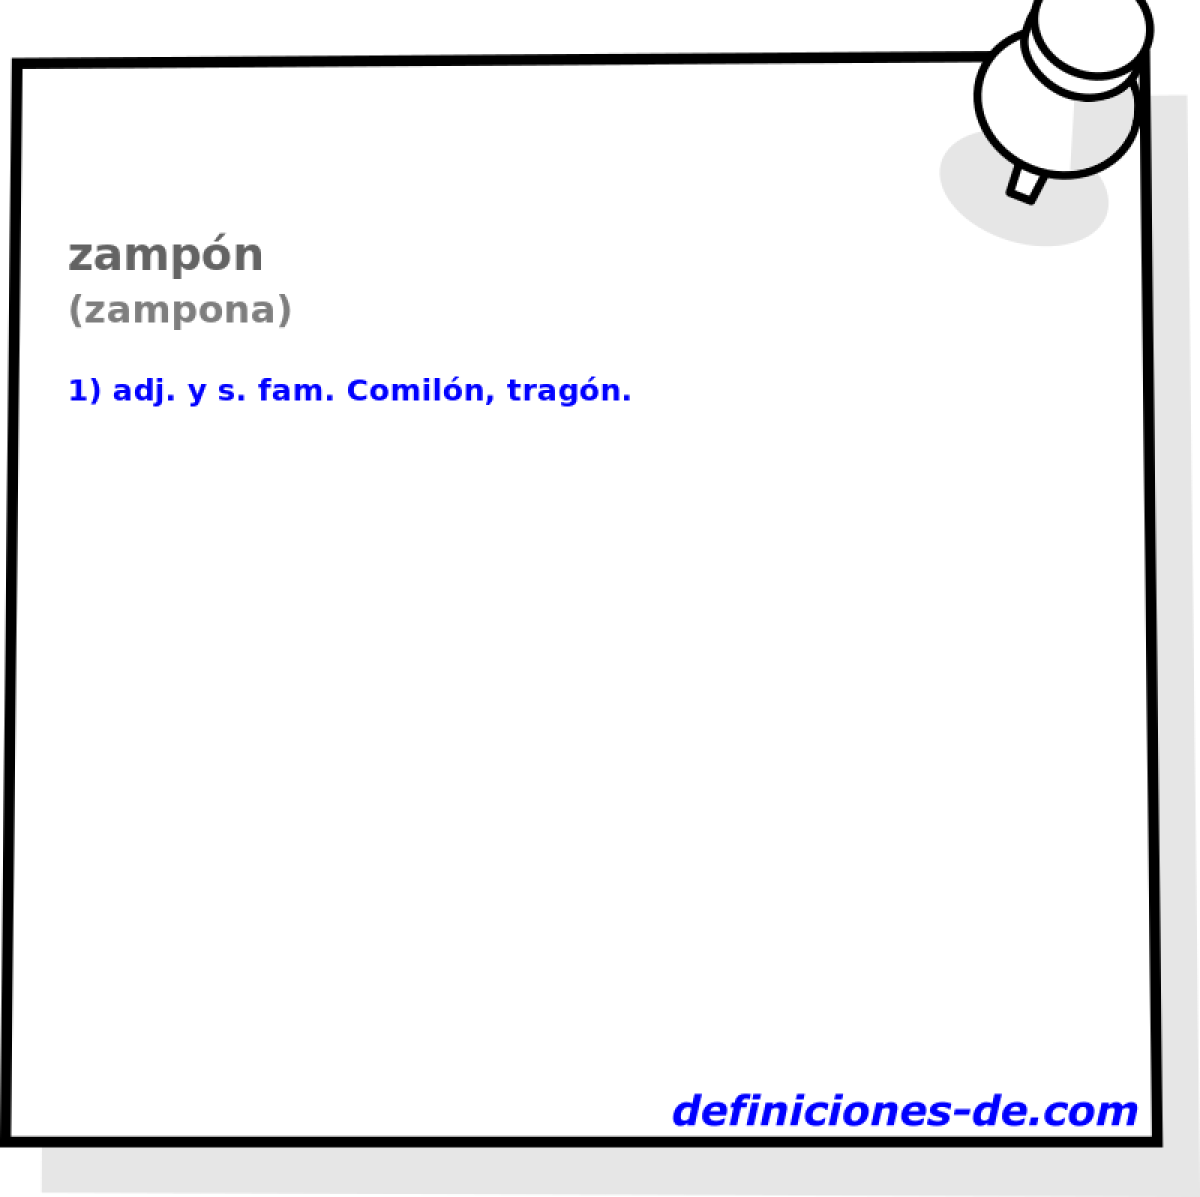 zampn (zampona)